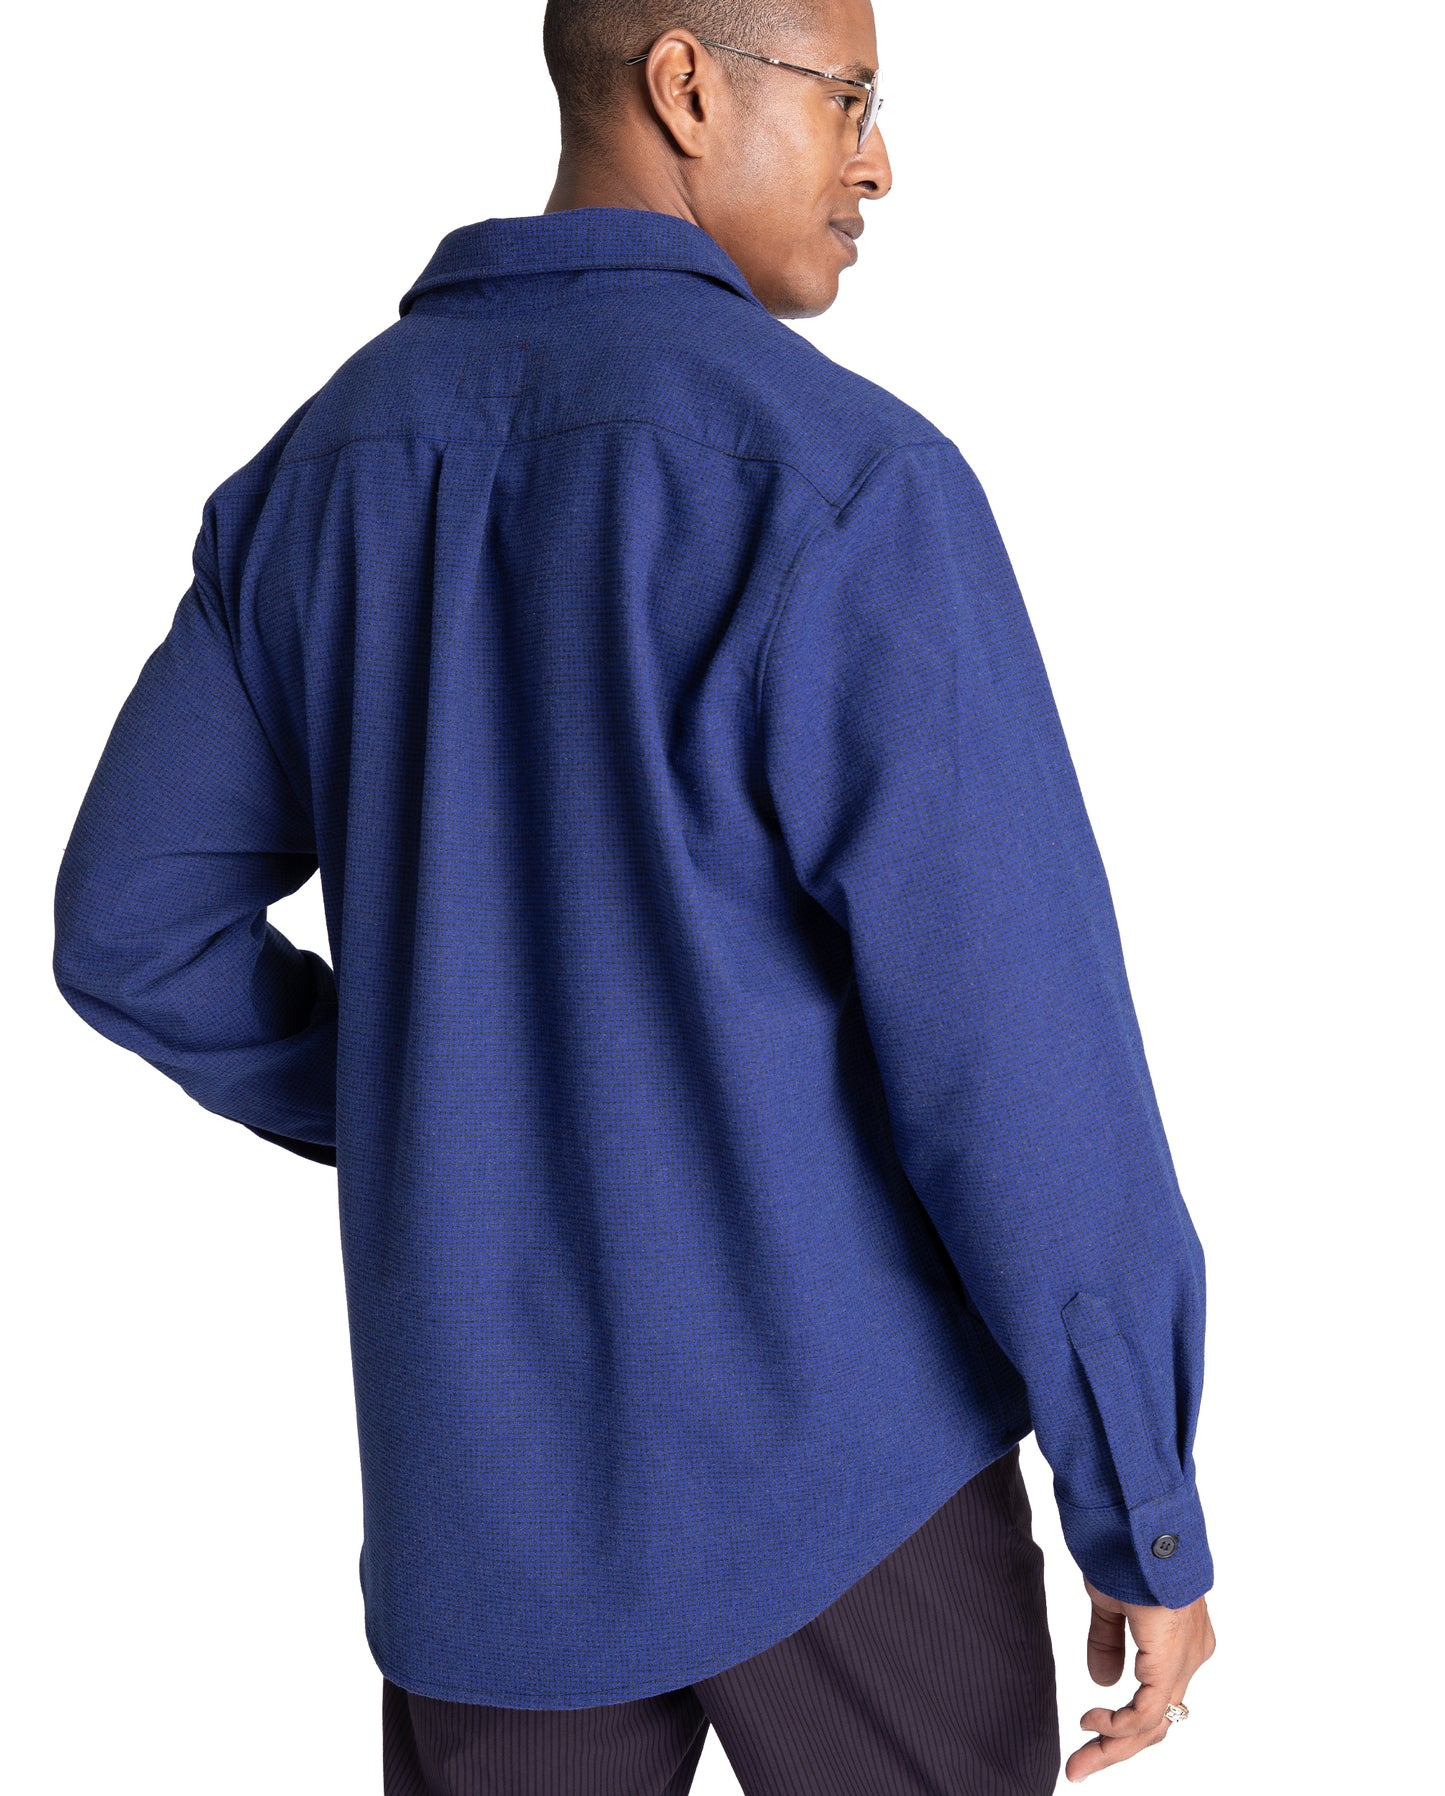 Brug Shirt - Electric Blue - Wool Micro Check